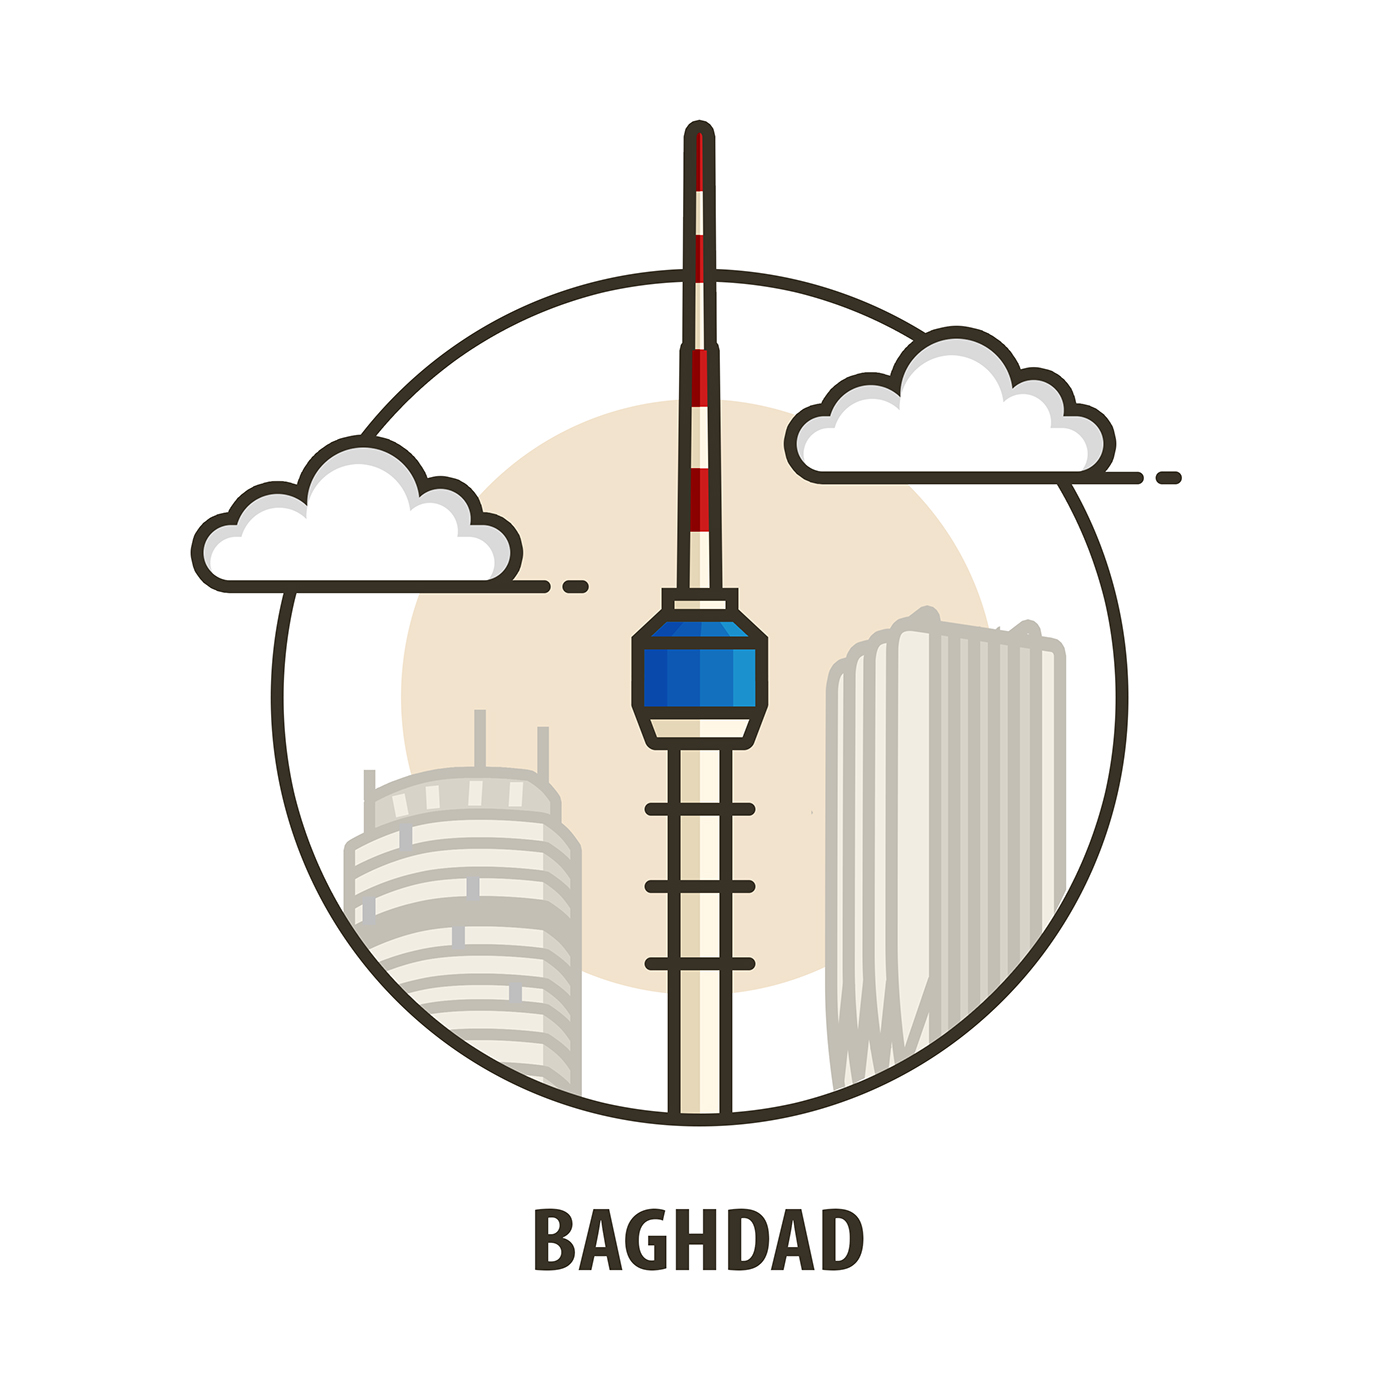 BAGHDAD iraq graphic design  falt flat design art tower